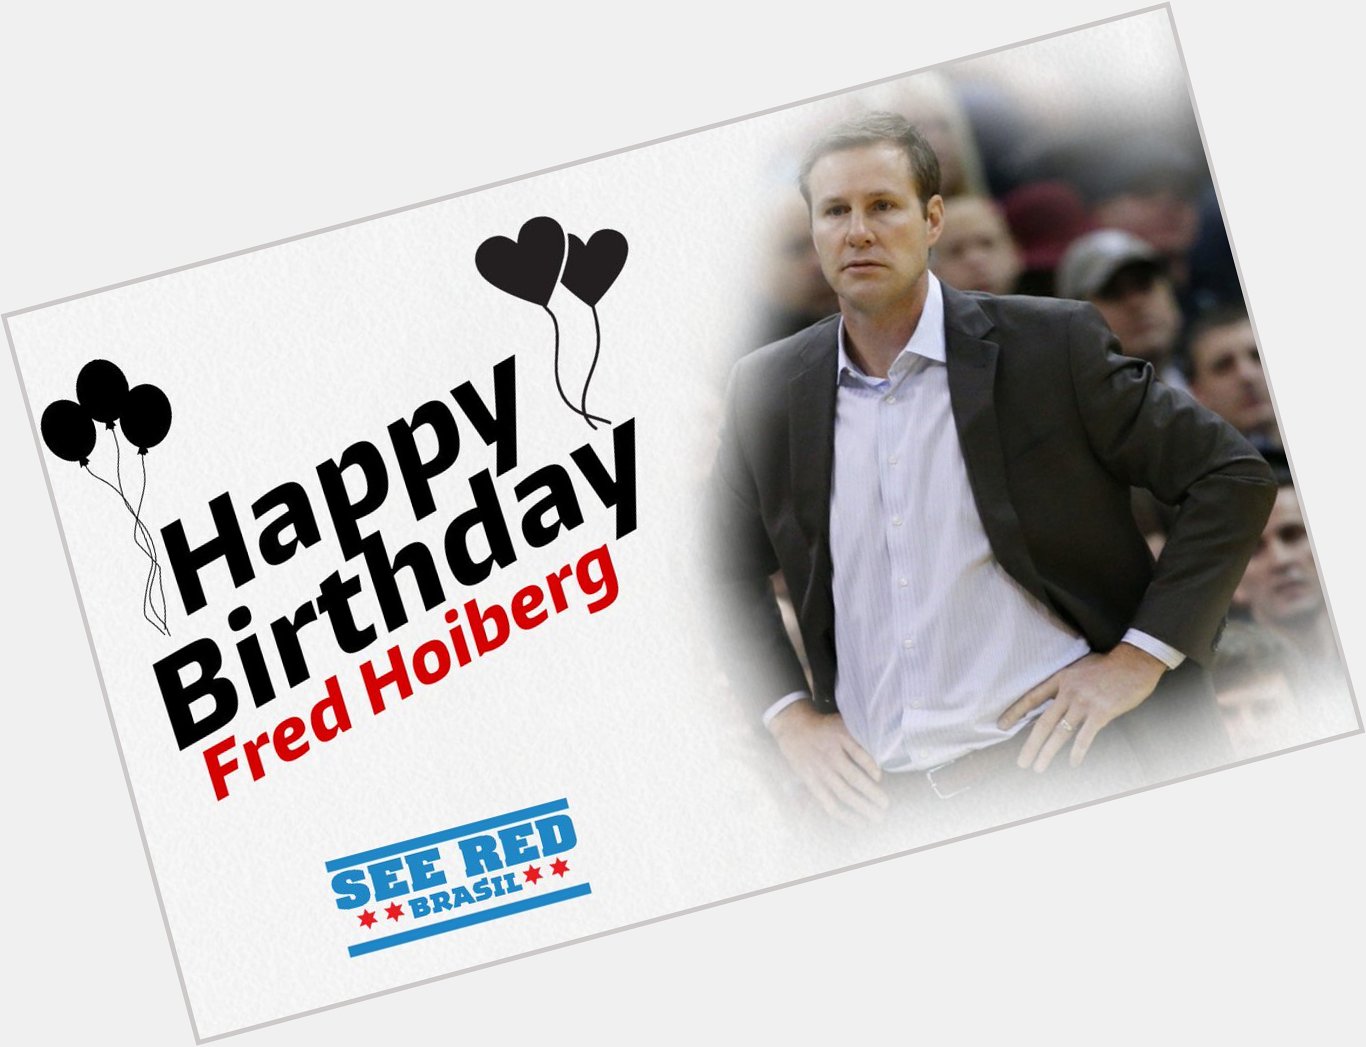 O treinador Fred Hoiberg completa 44 anos hoje.
Happy Birthday     